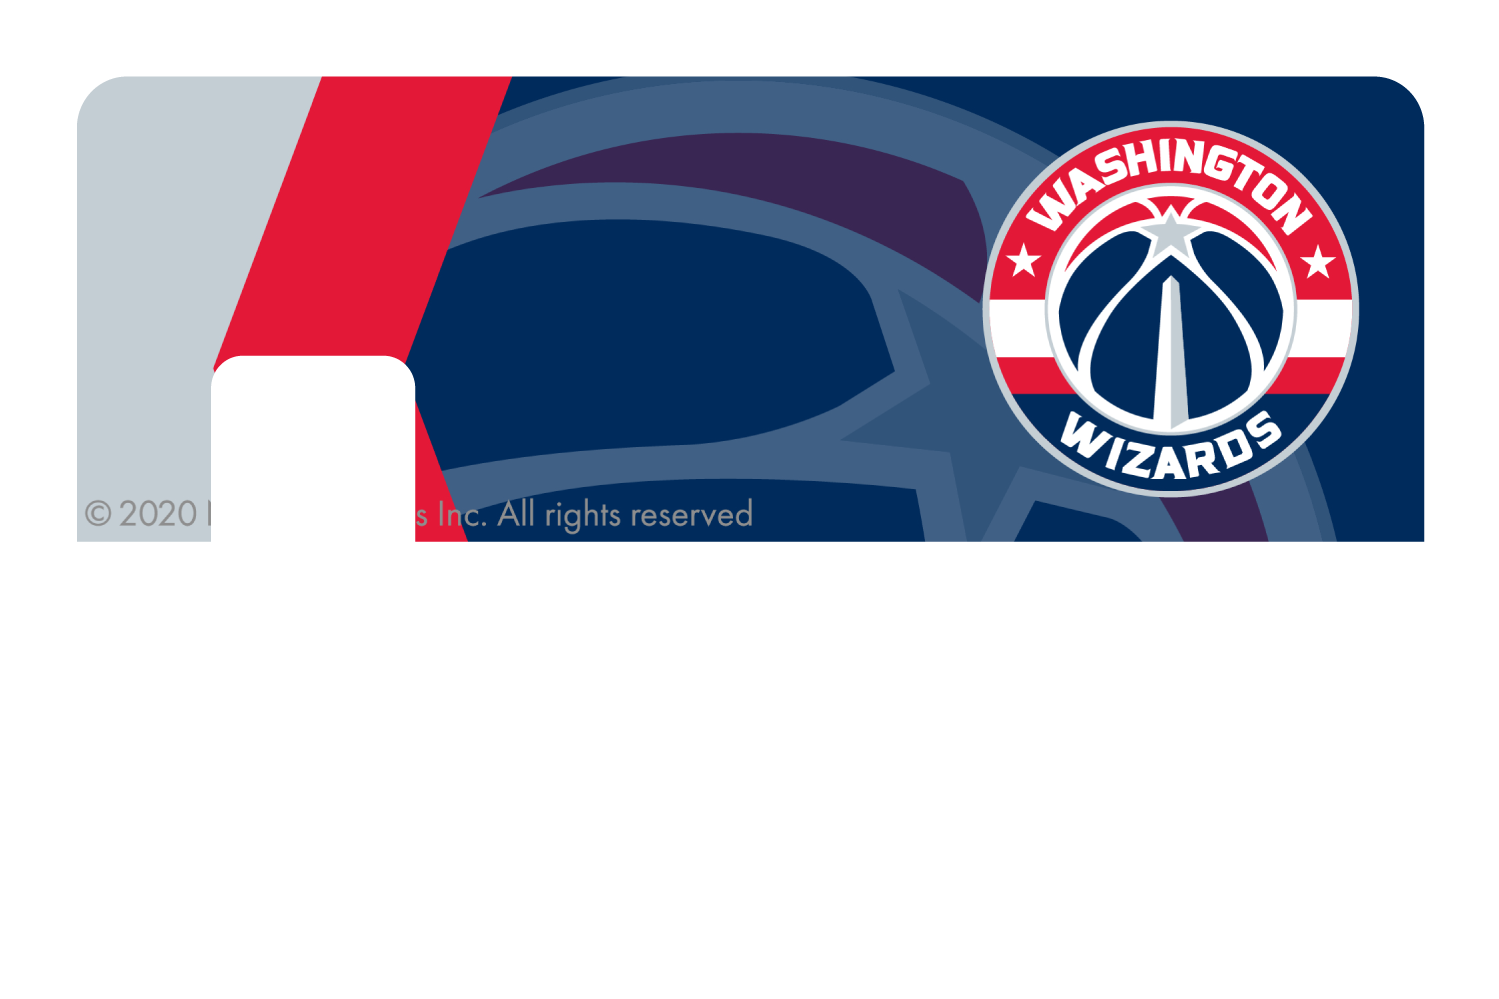 Washington Wizards: Crossover